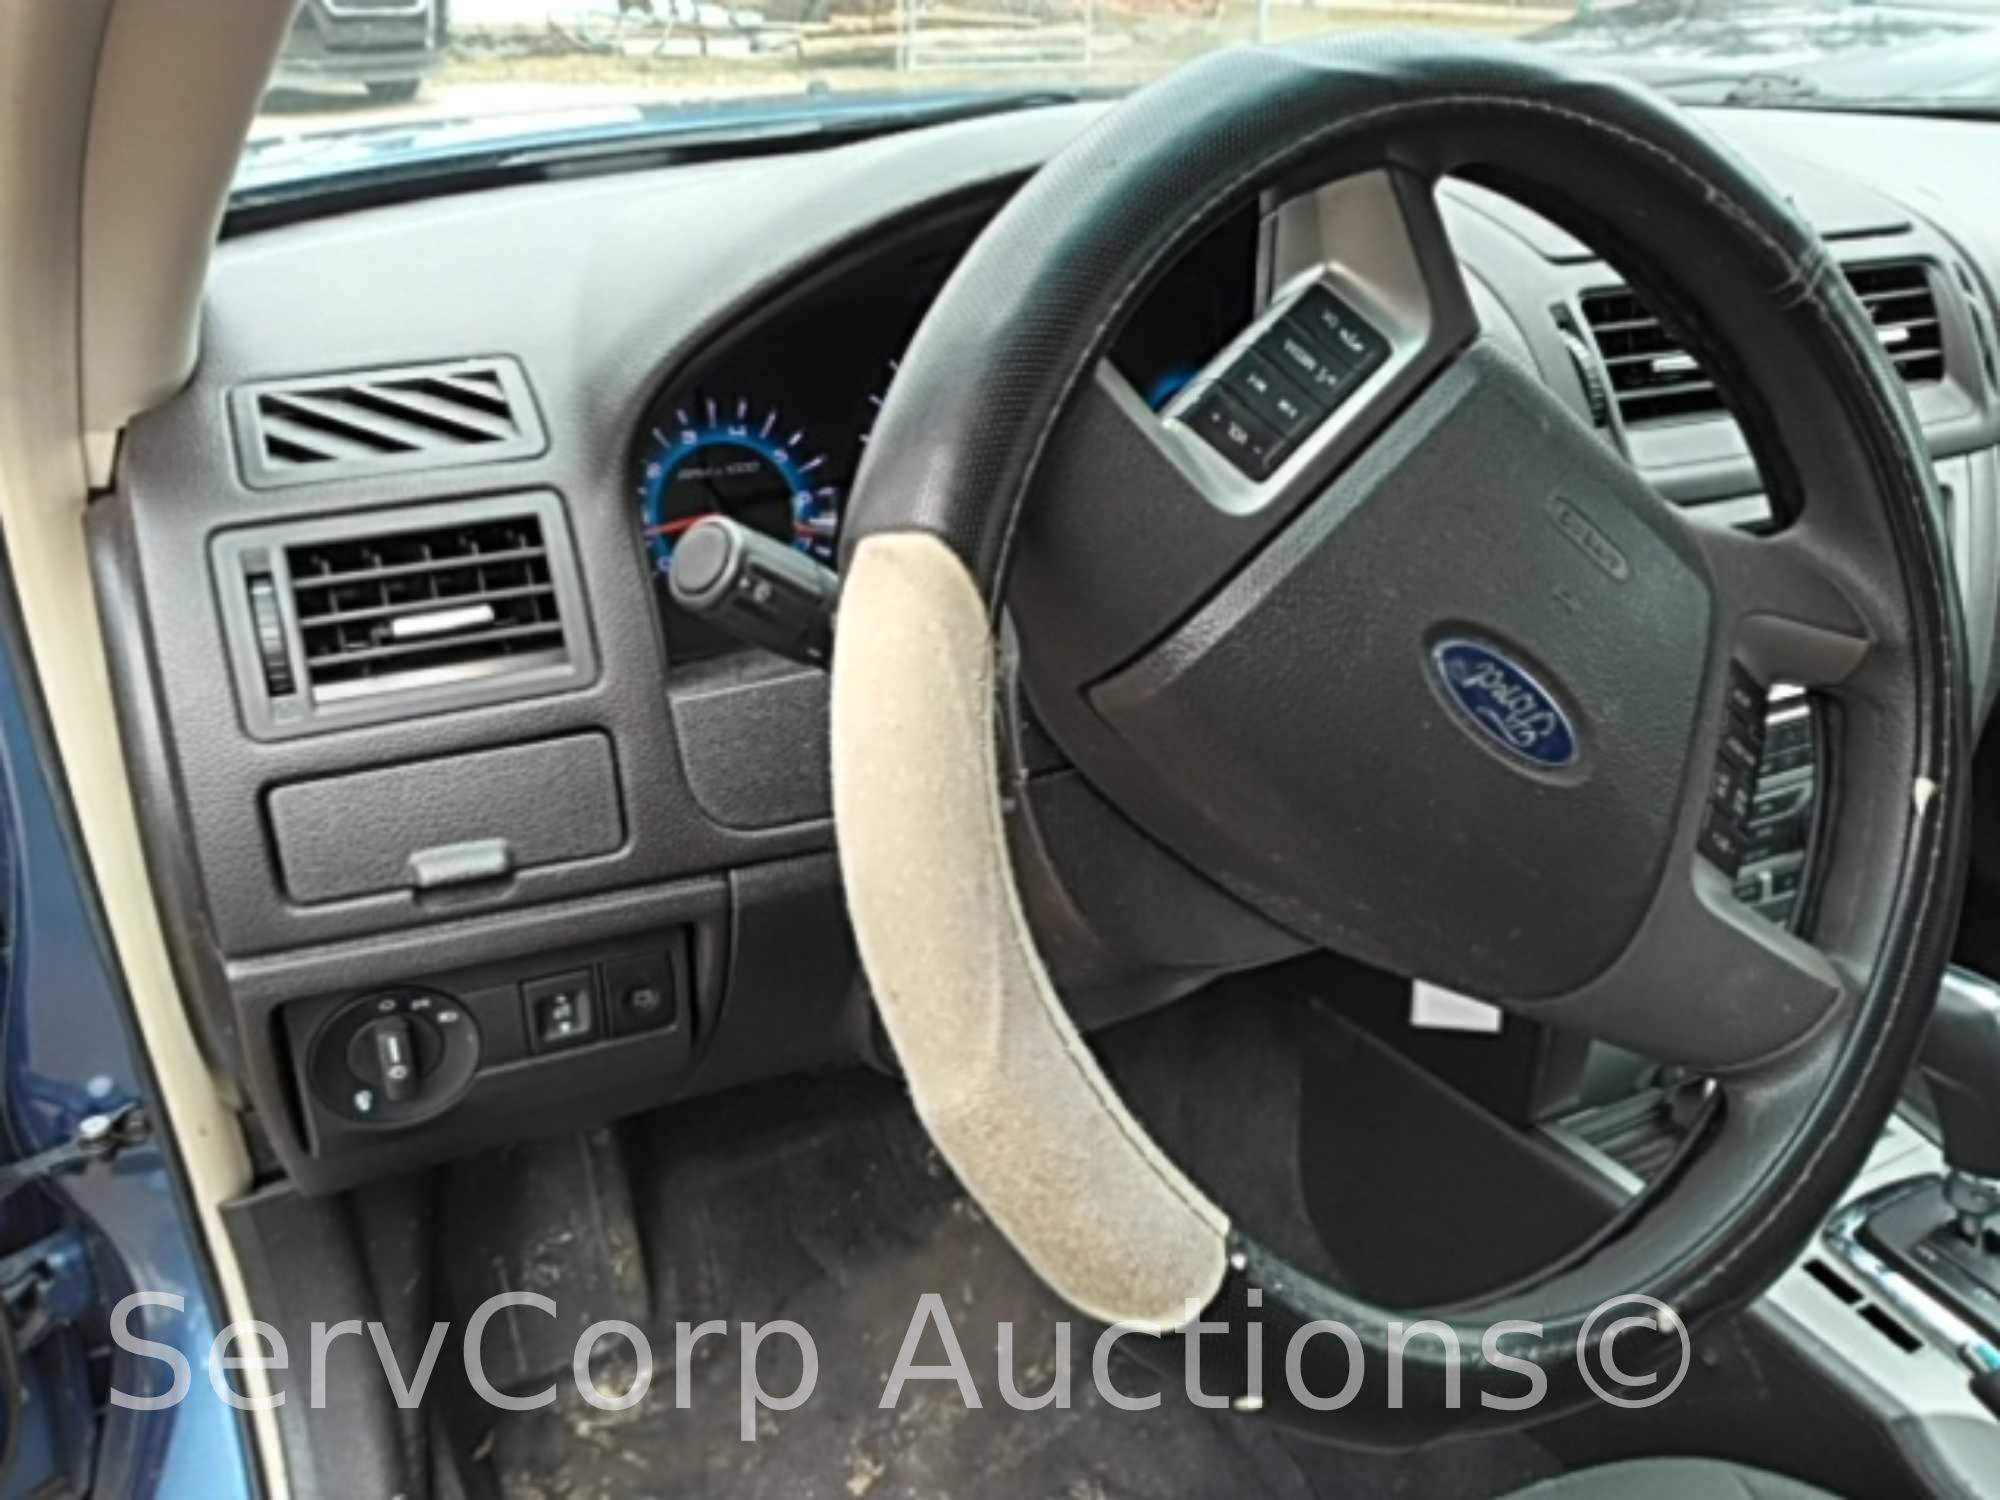 2010 Ford Fusion Passenger Car, VIN # 3FAHP0HG6AR404461